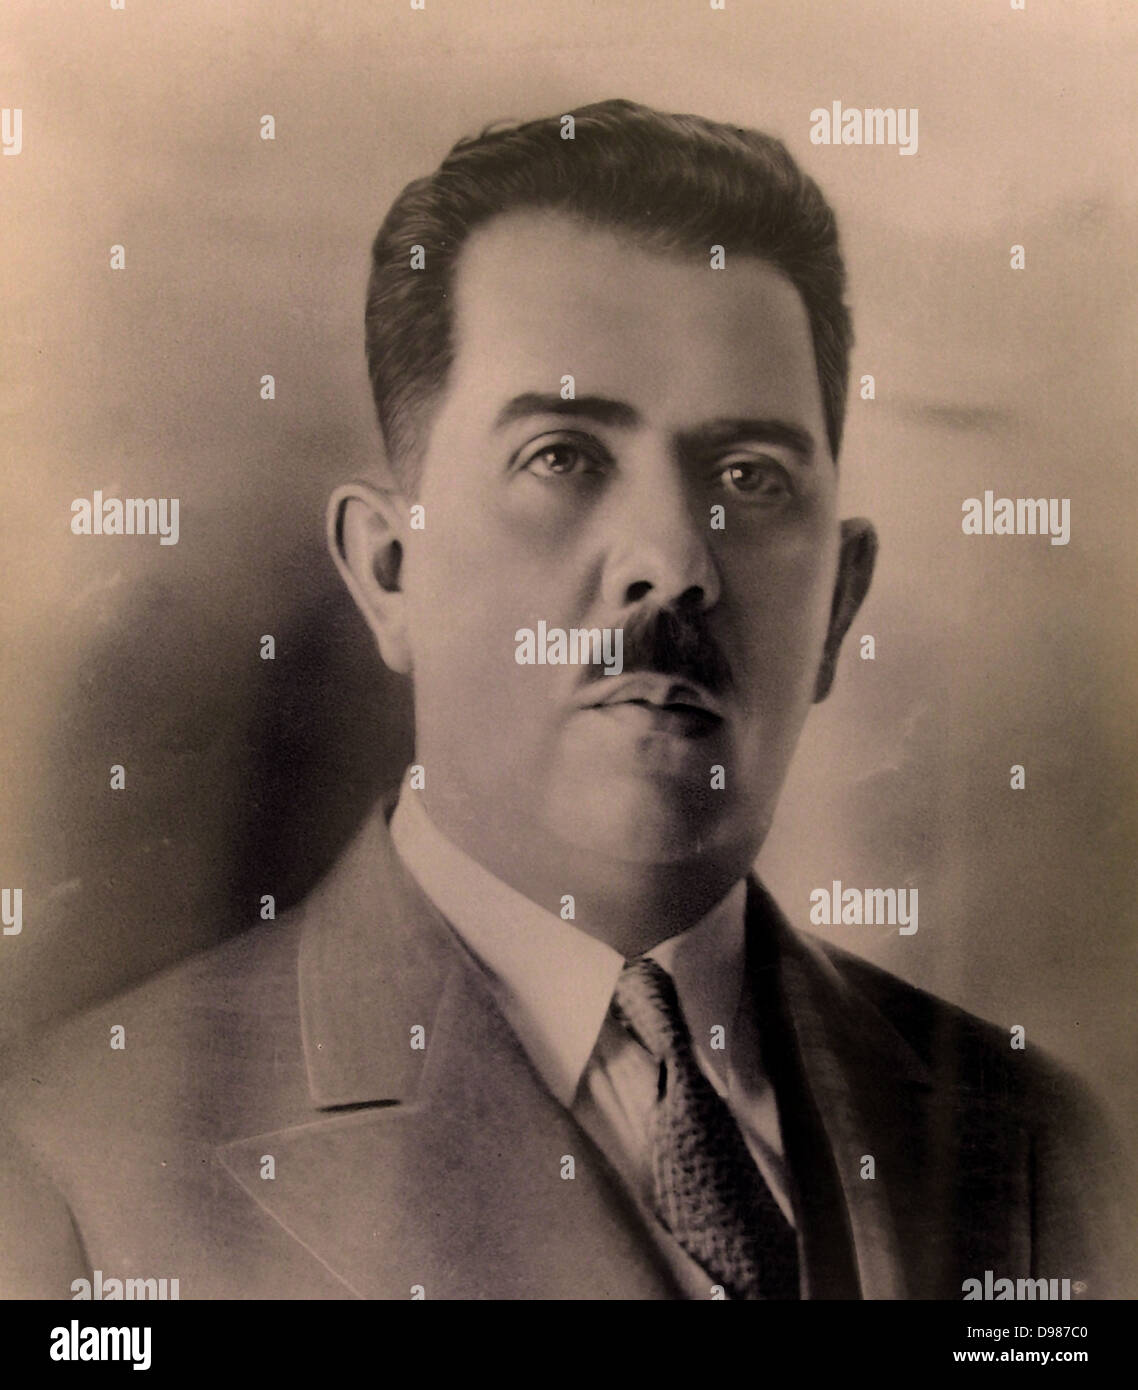 Lázaro Cárdenas del Río (21 maggio 1895 - 19 ottobre 1970) è stato Presidente del Messico dal 1934 al 1940 Foto Stock